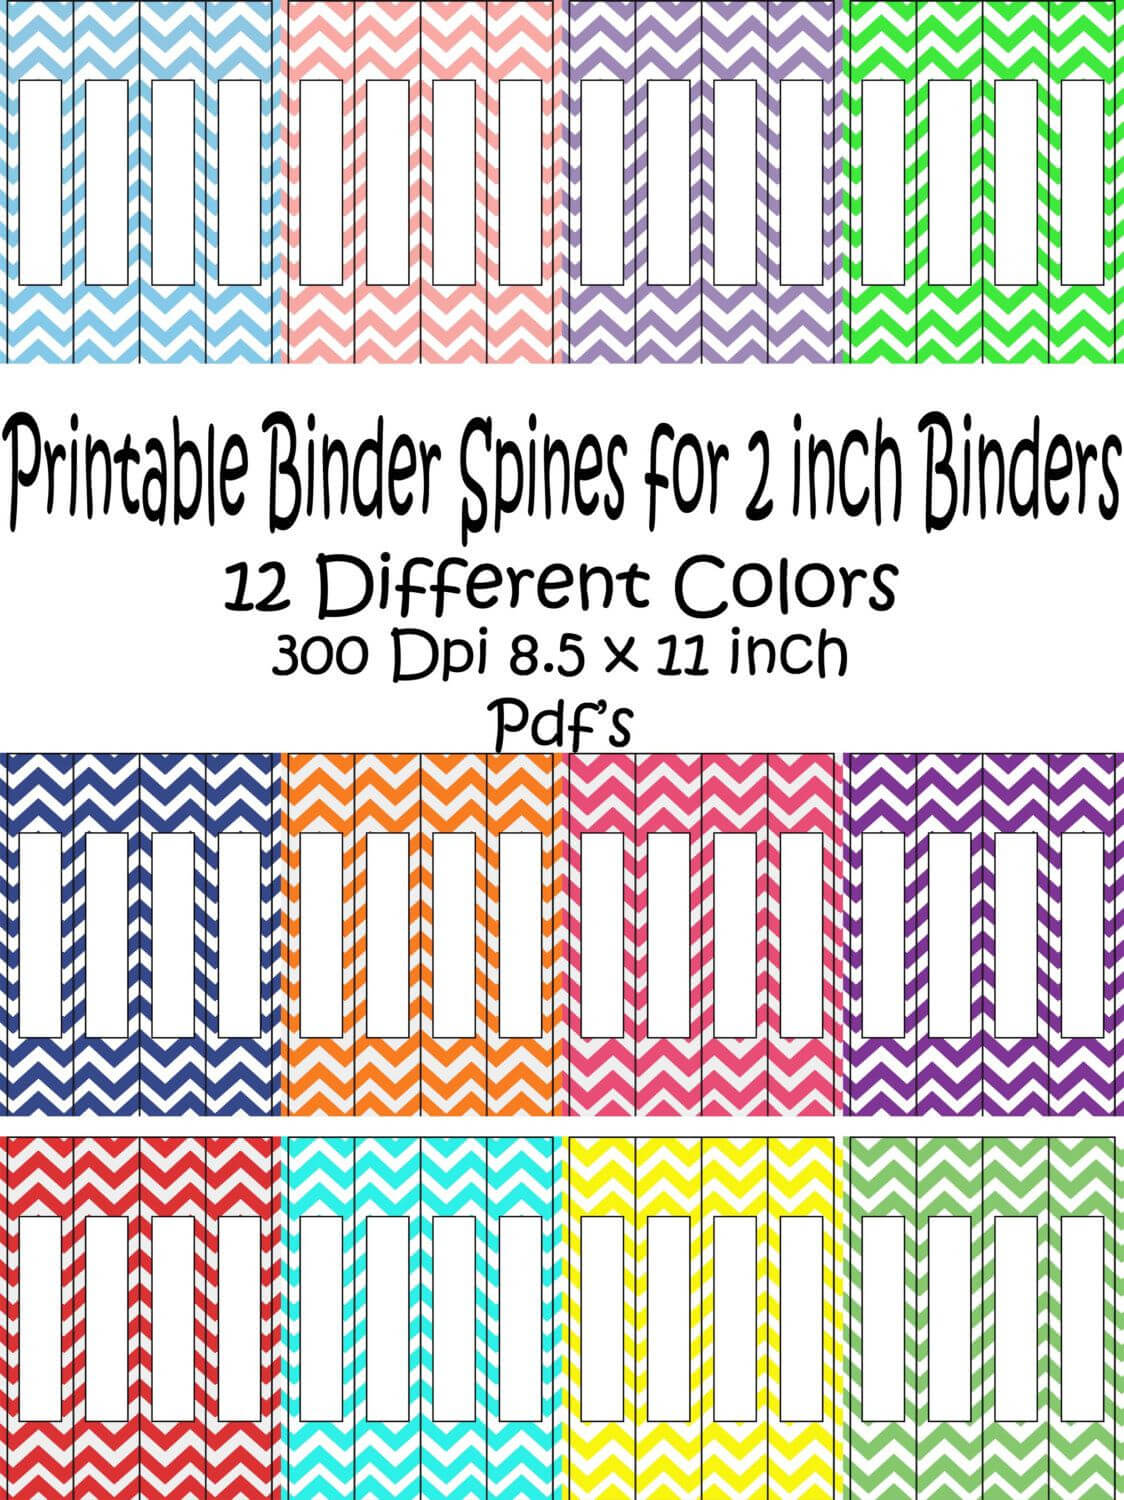 007 Binder Spine Label Template Imposing Ideas Free 1 Inch 3 Inside 3 Inch Binder Spine Template Word